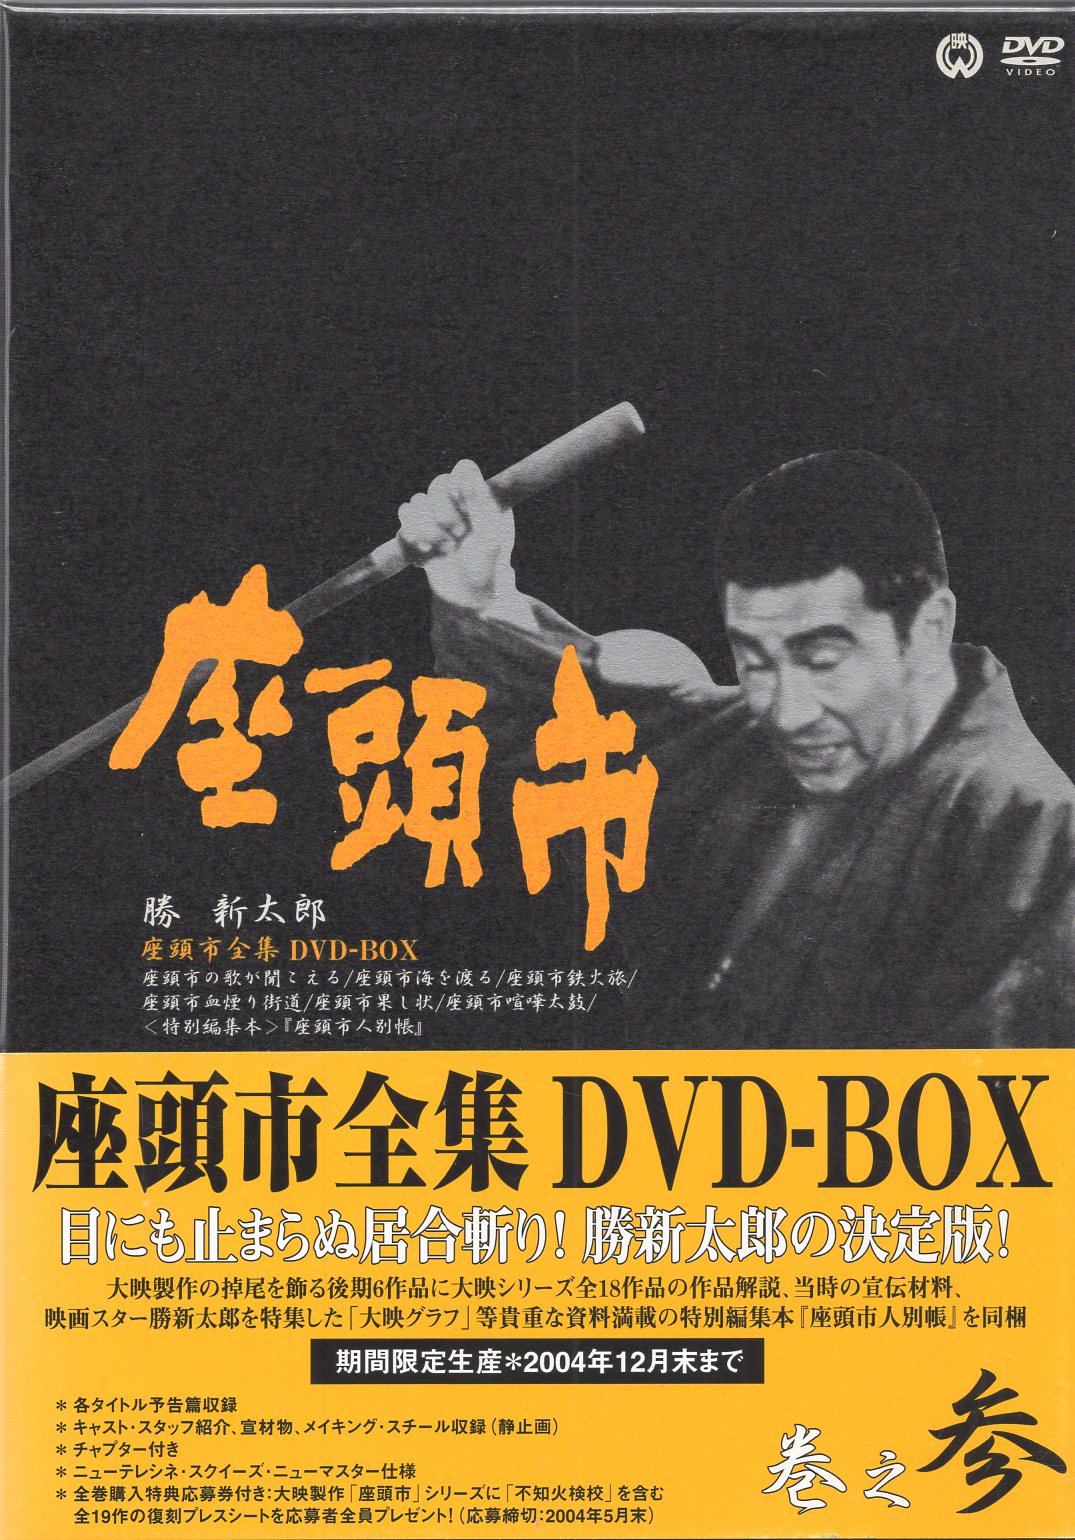 購入純正 勝新太郎 座頭市 DVD 17巻セット | www.paradorelquijote.com